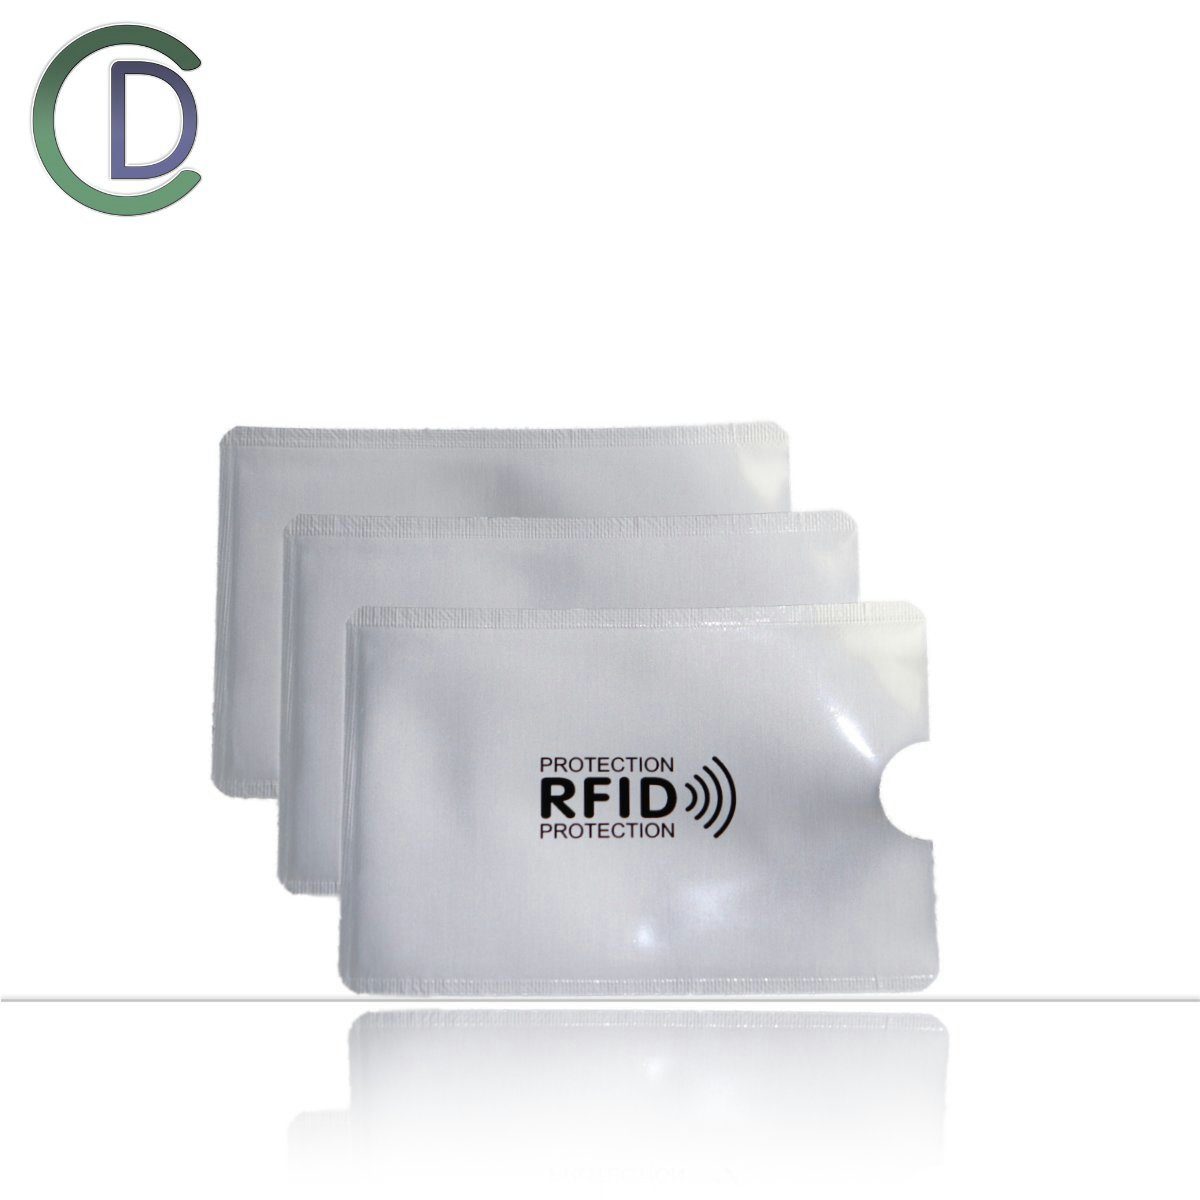 Leicke Kartenetui TÜV geprüfte RFID Blocking NFC Schutzhüllen (9 Stück)für  Kreditkarten, EC-Karten Bankkarten Reisepass Ausweise, Kartenhüllen  NFC-Blocker